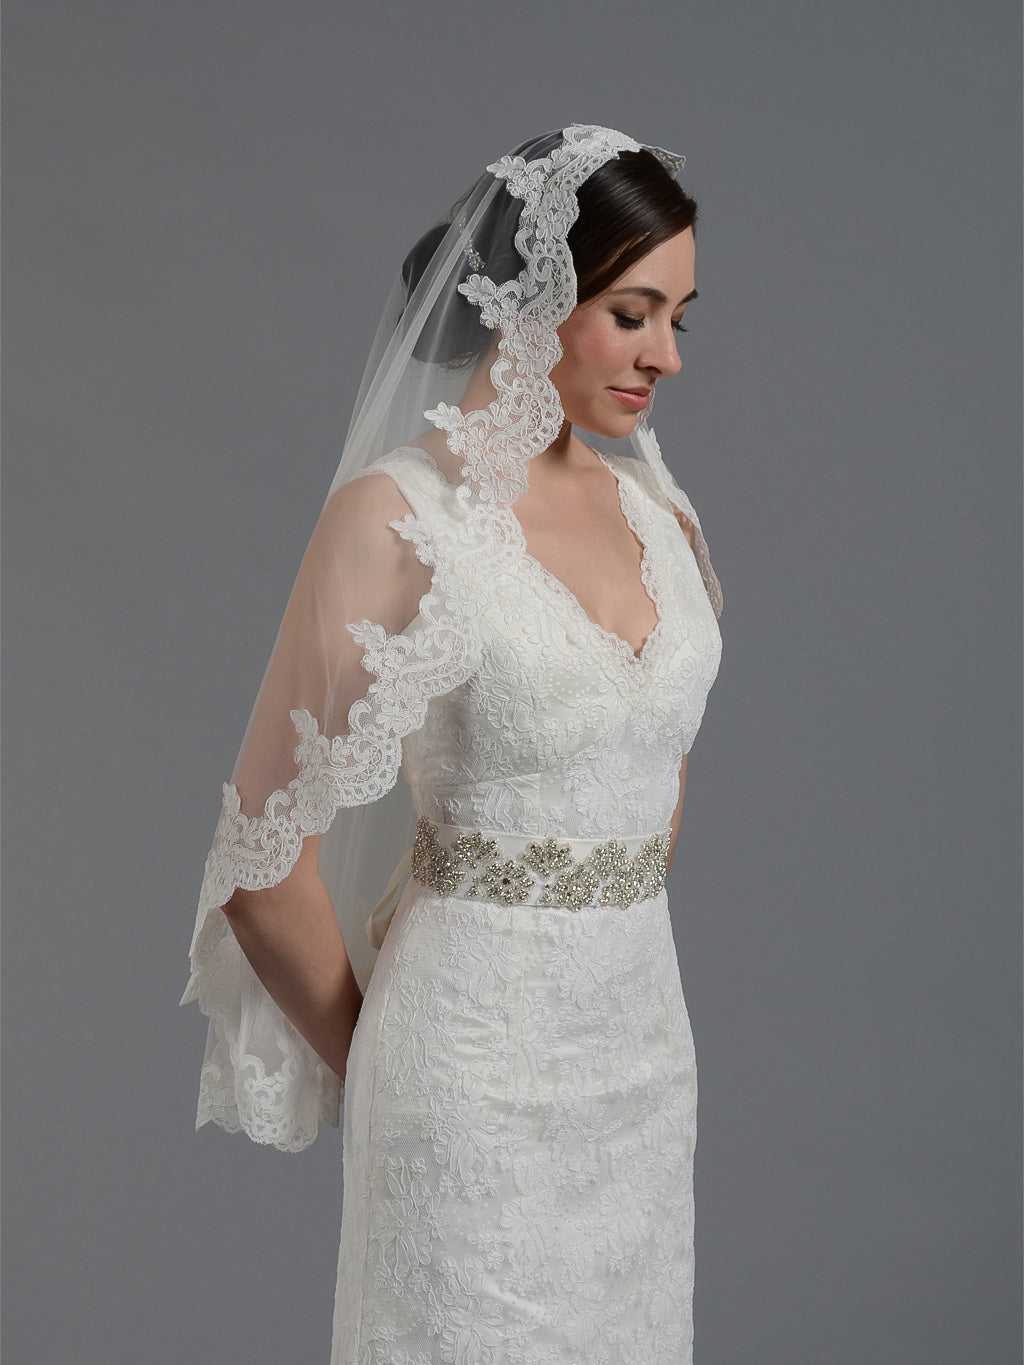 Wedding Veils - Bridal Lace Mantilla Veil - Cathedral Length White